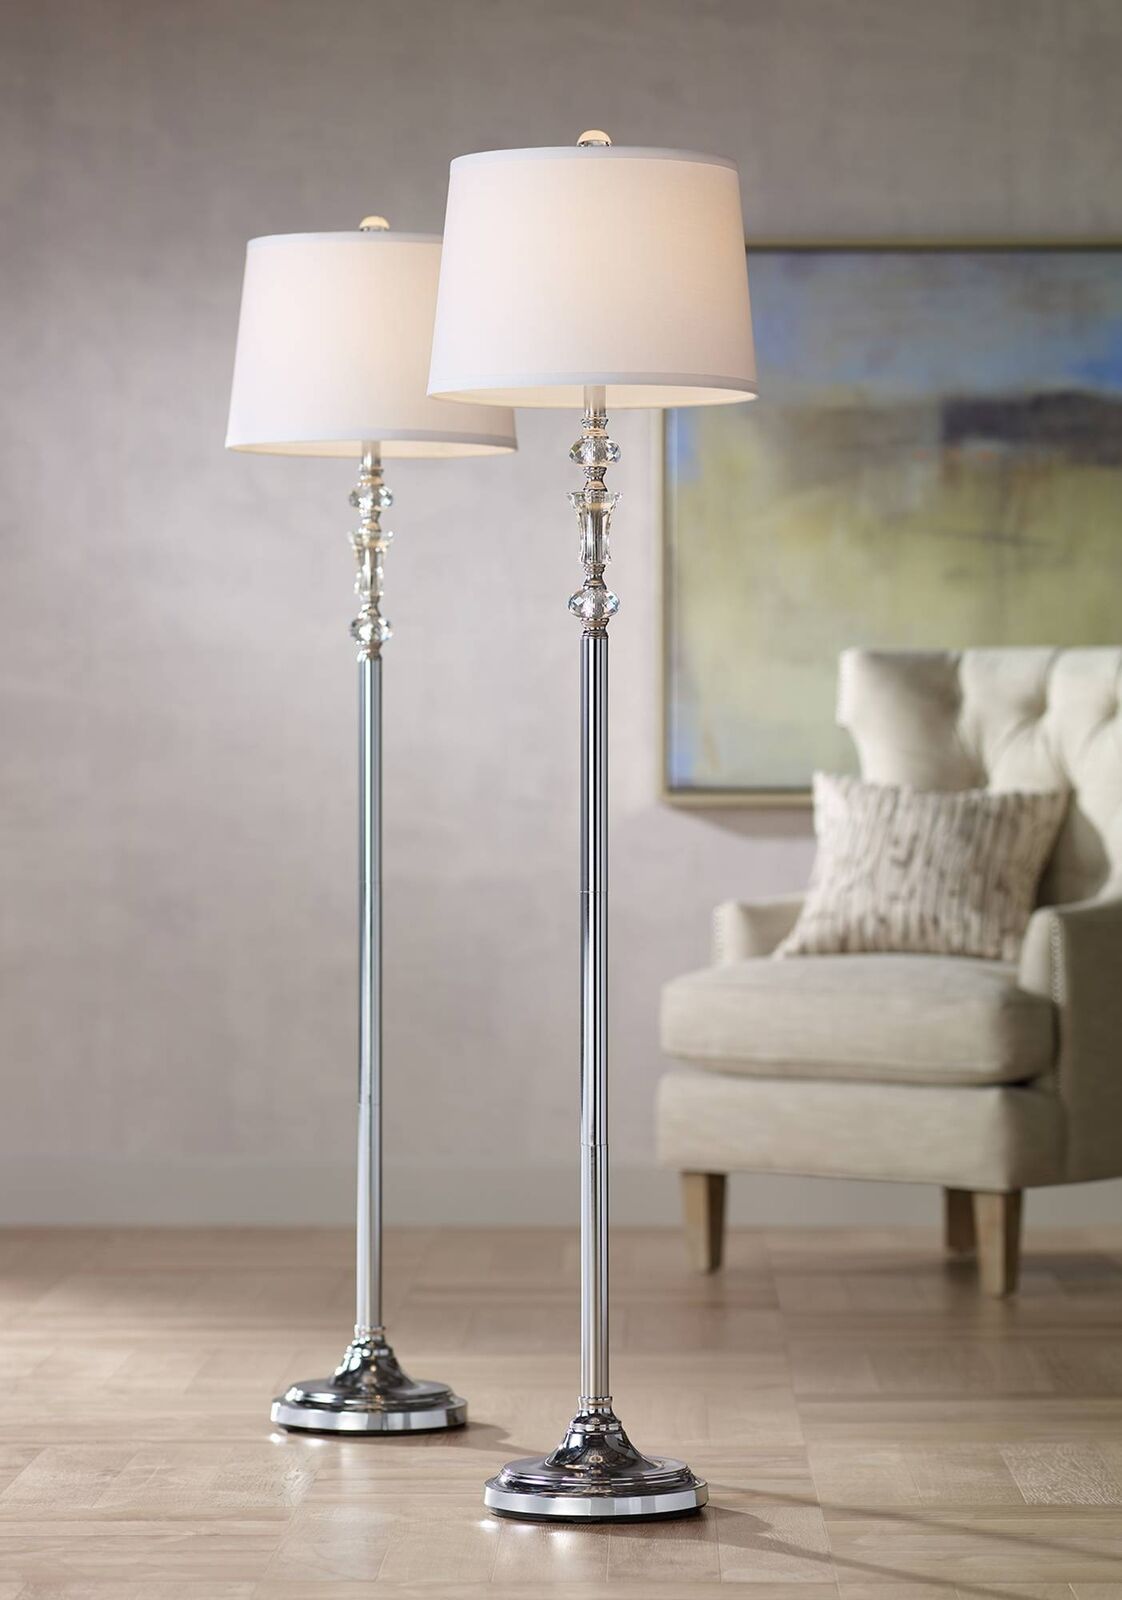 Floor Lamps Set Of 2 Polished Steel Crystal Glass For Living Room Bedroom |  Ebay Inside Wide Crystal Floor Lamps (View 13 of 15)